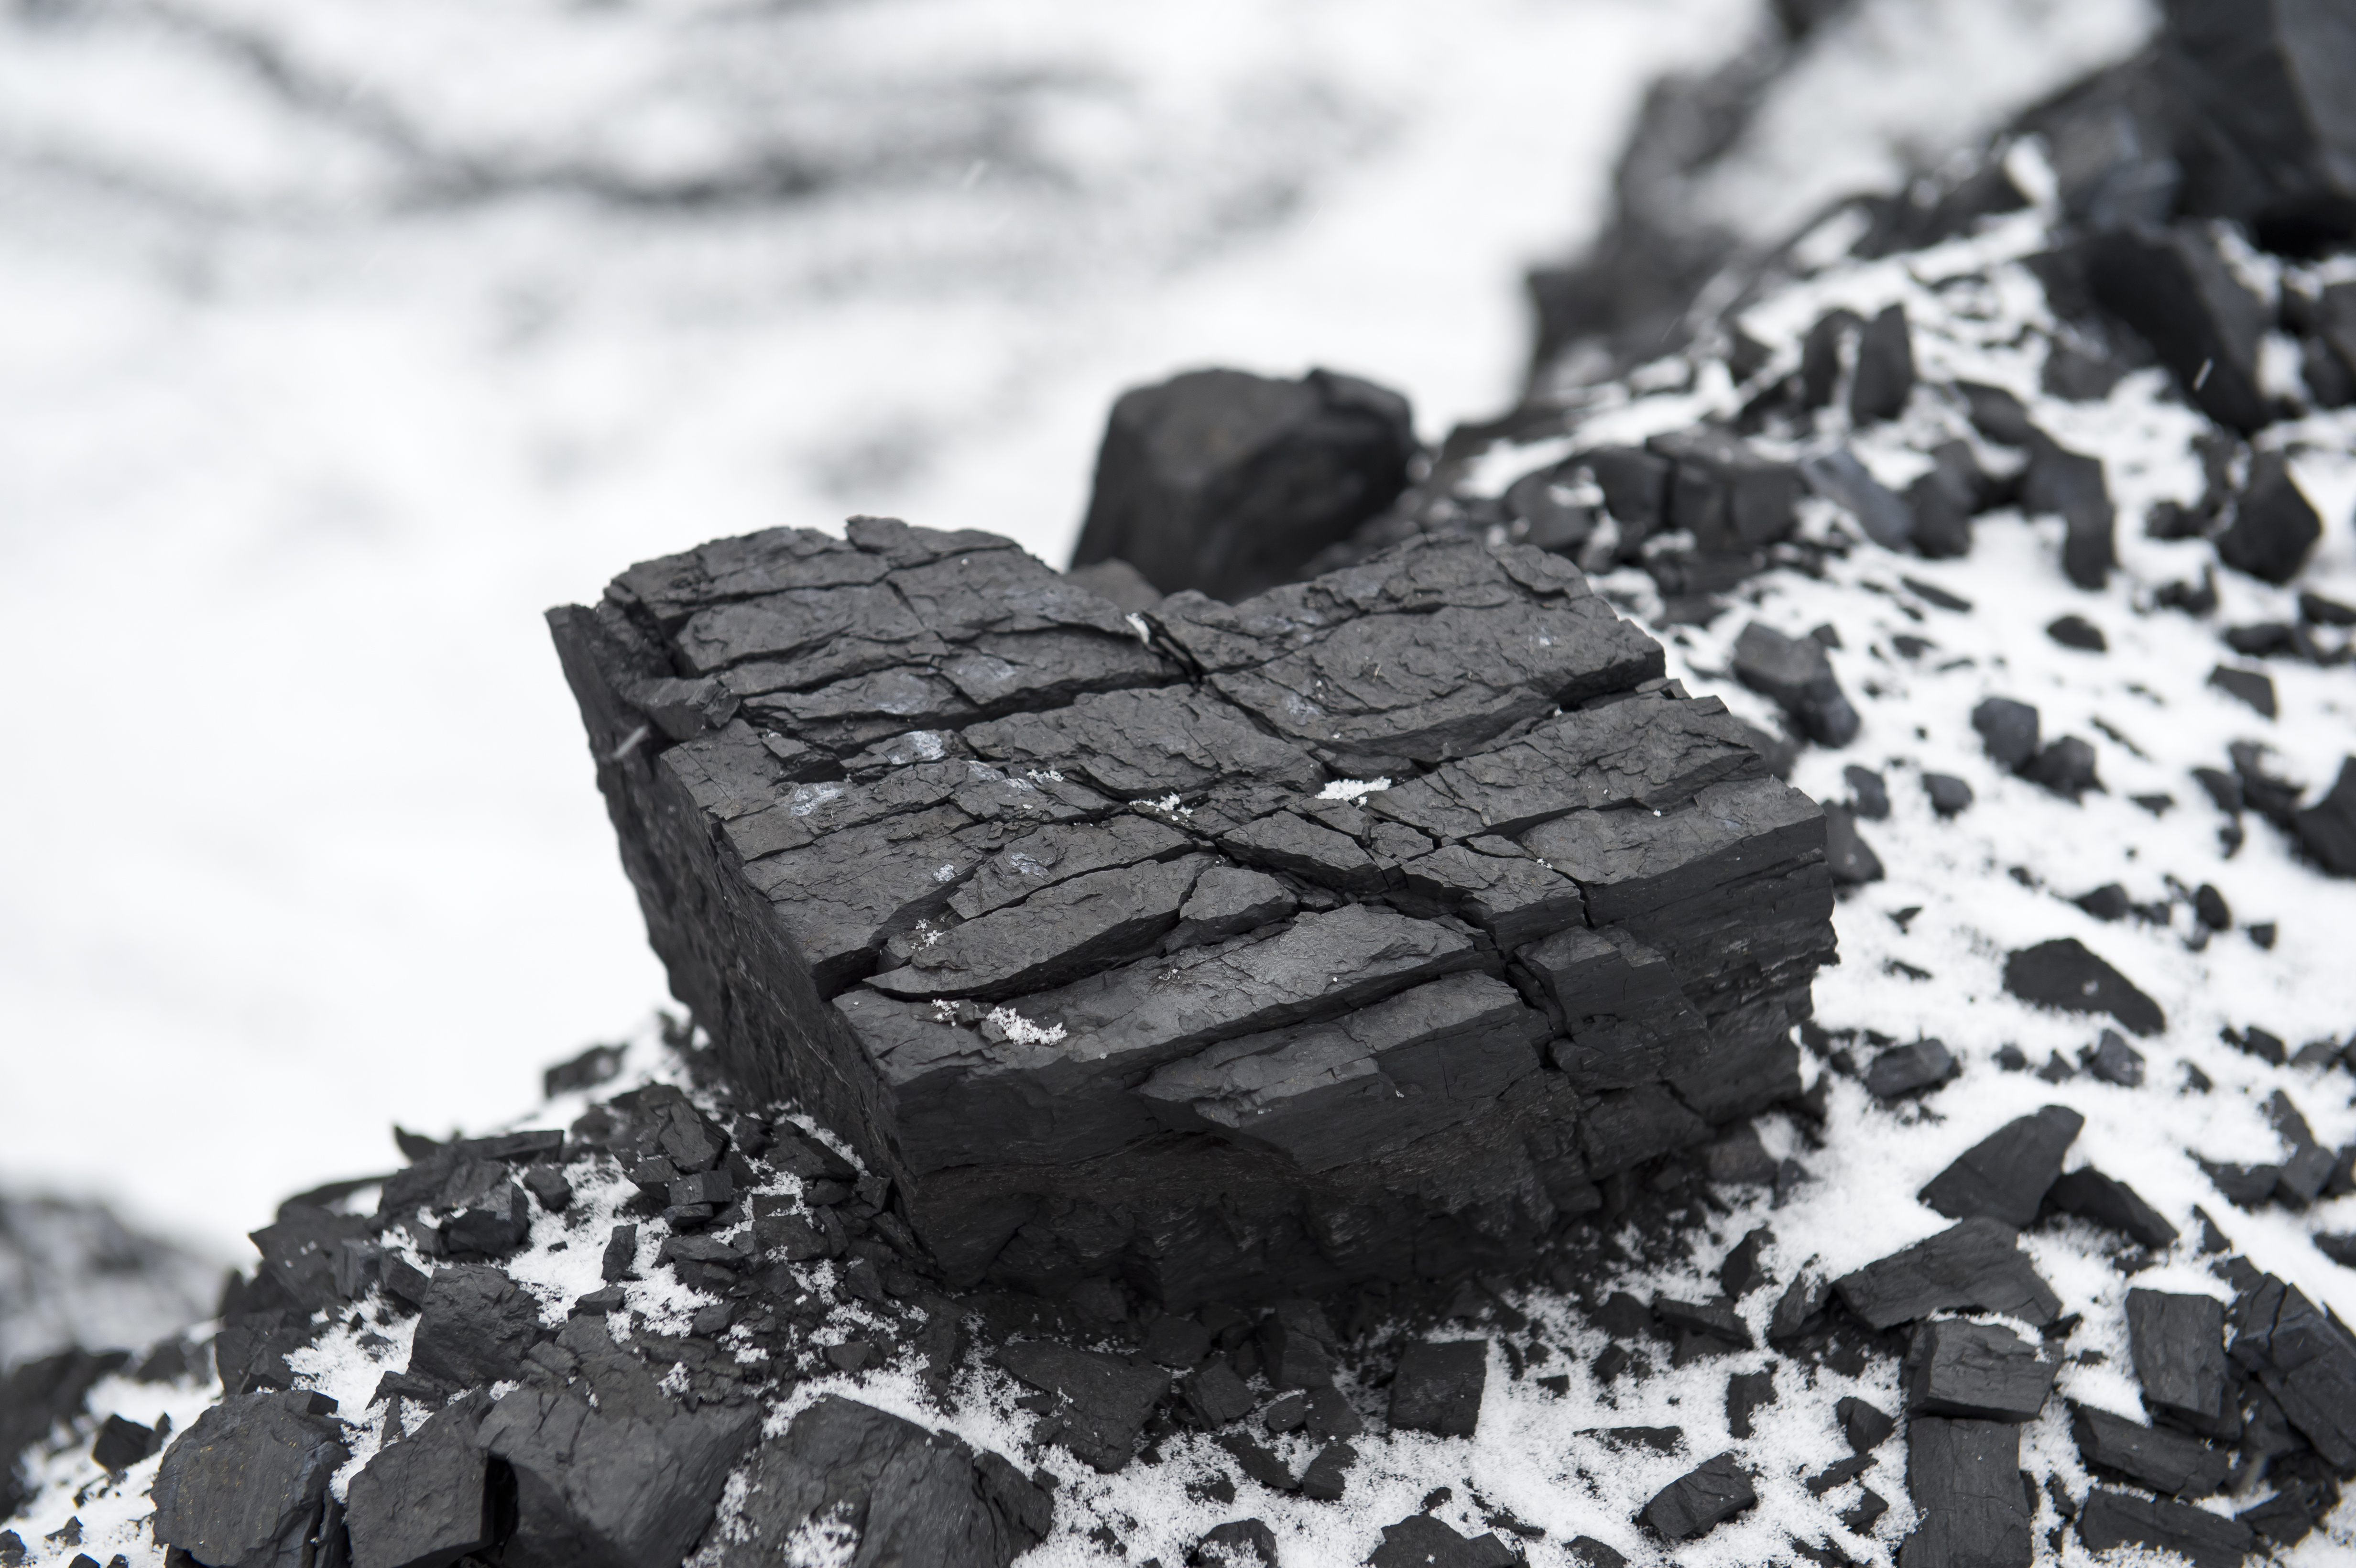 piece of coal detail